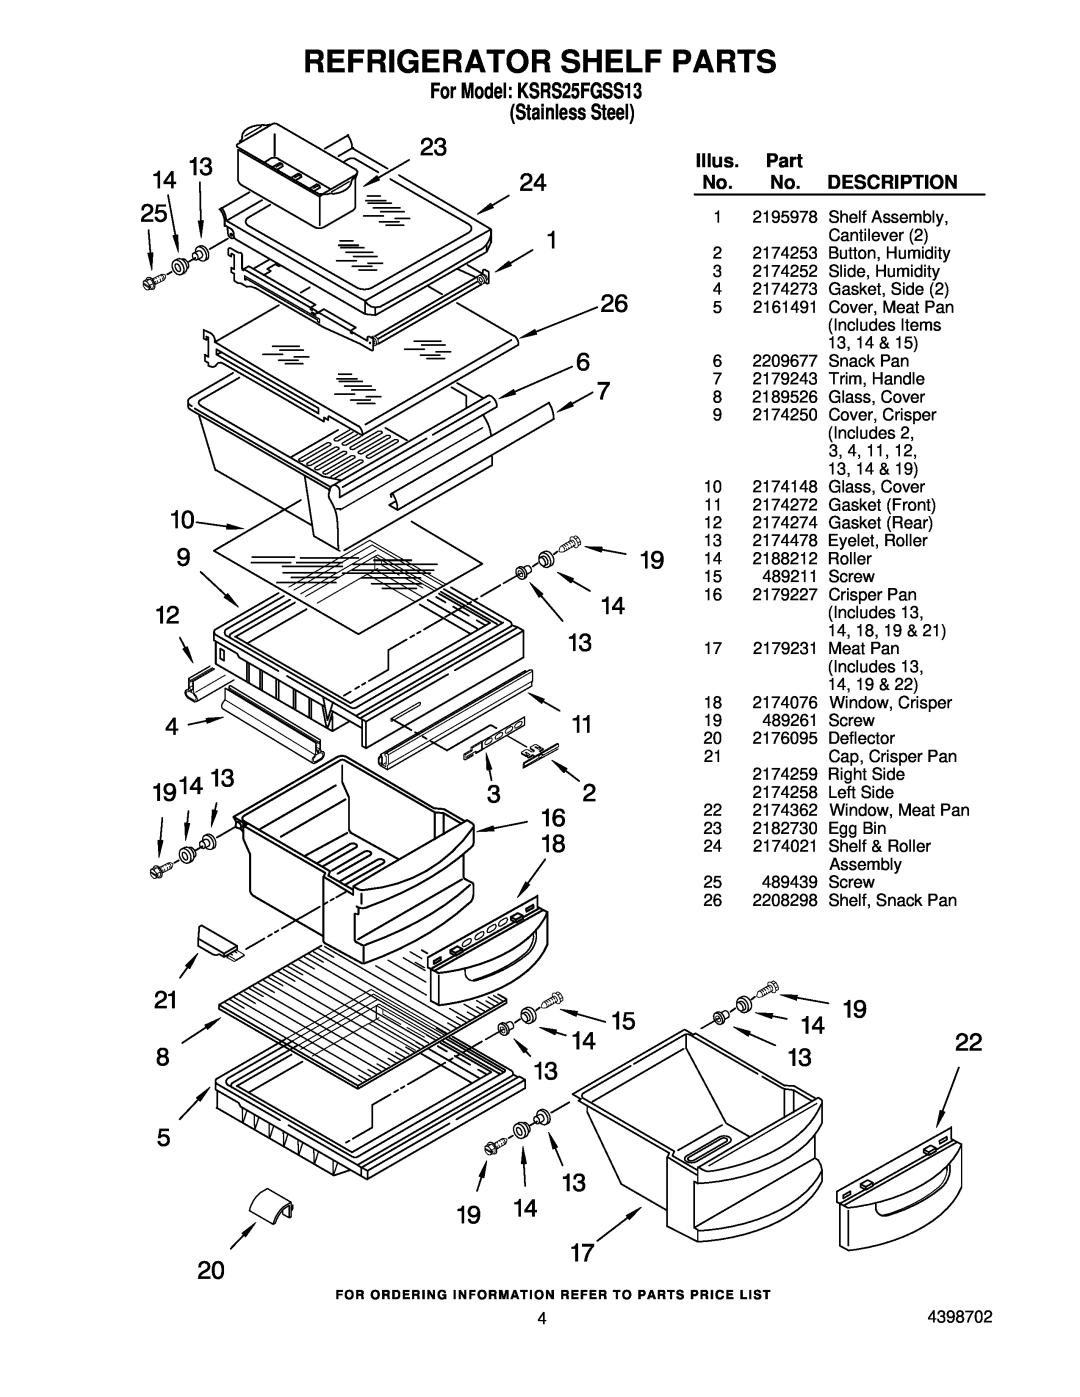 KitchenAid manual Refrigerator Shelf Parts, For Model KSRS25FGSS13 Stainless Steel, Illus, Description 